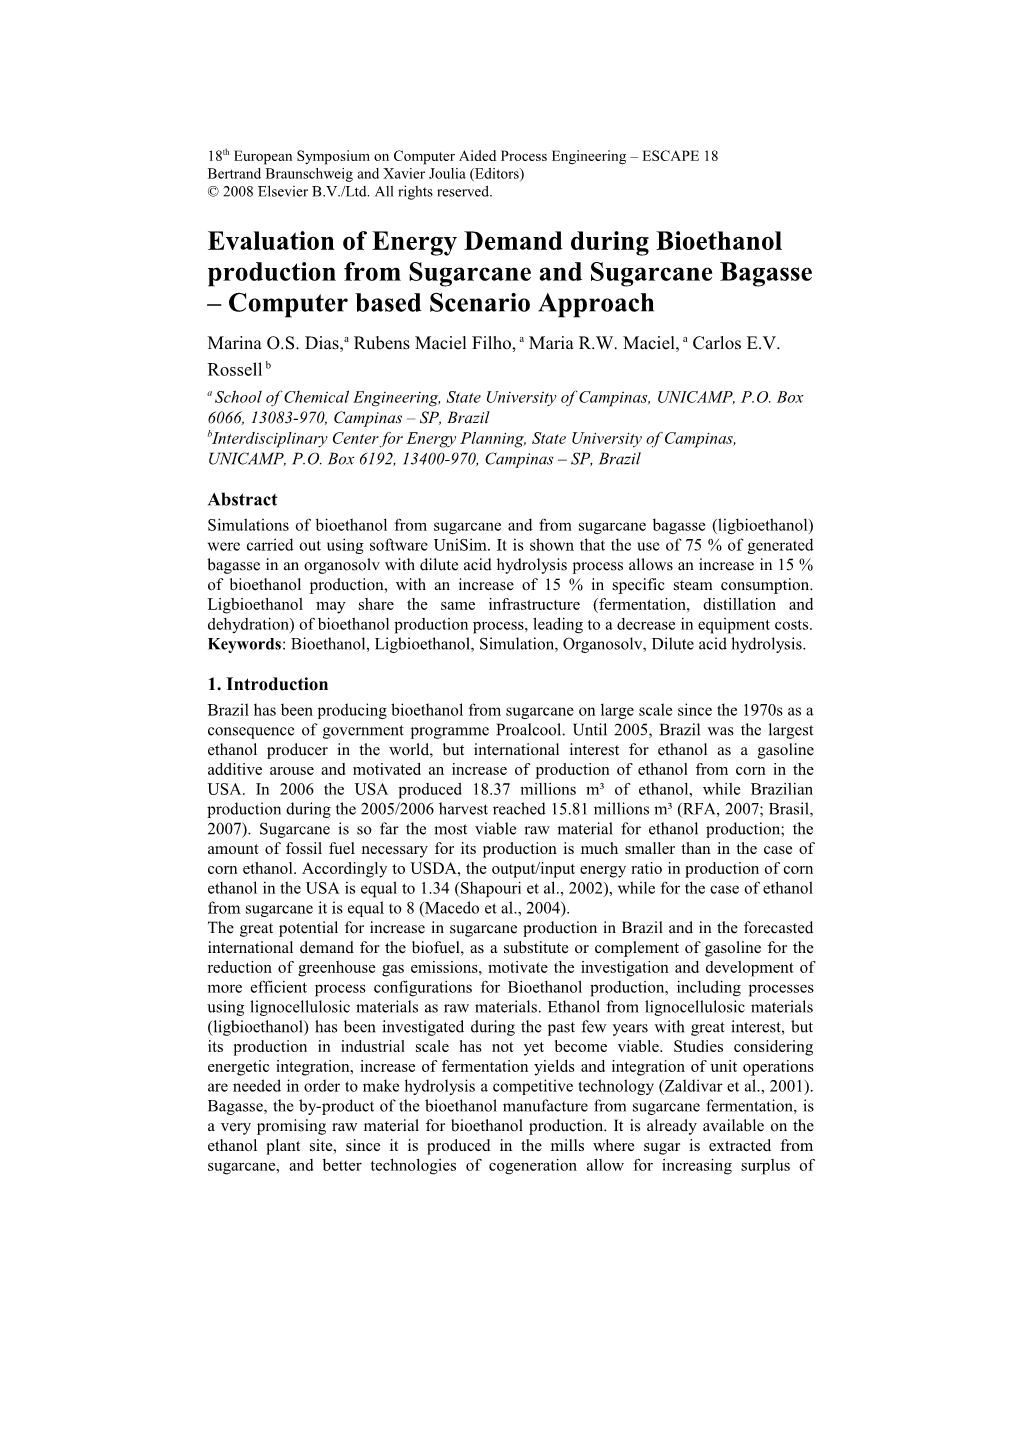 Evaluation of Energy Demand During Bioethanol Production from Sugarcane and Sugarcane